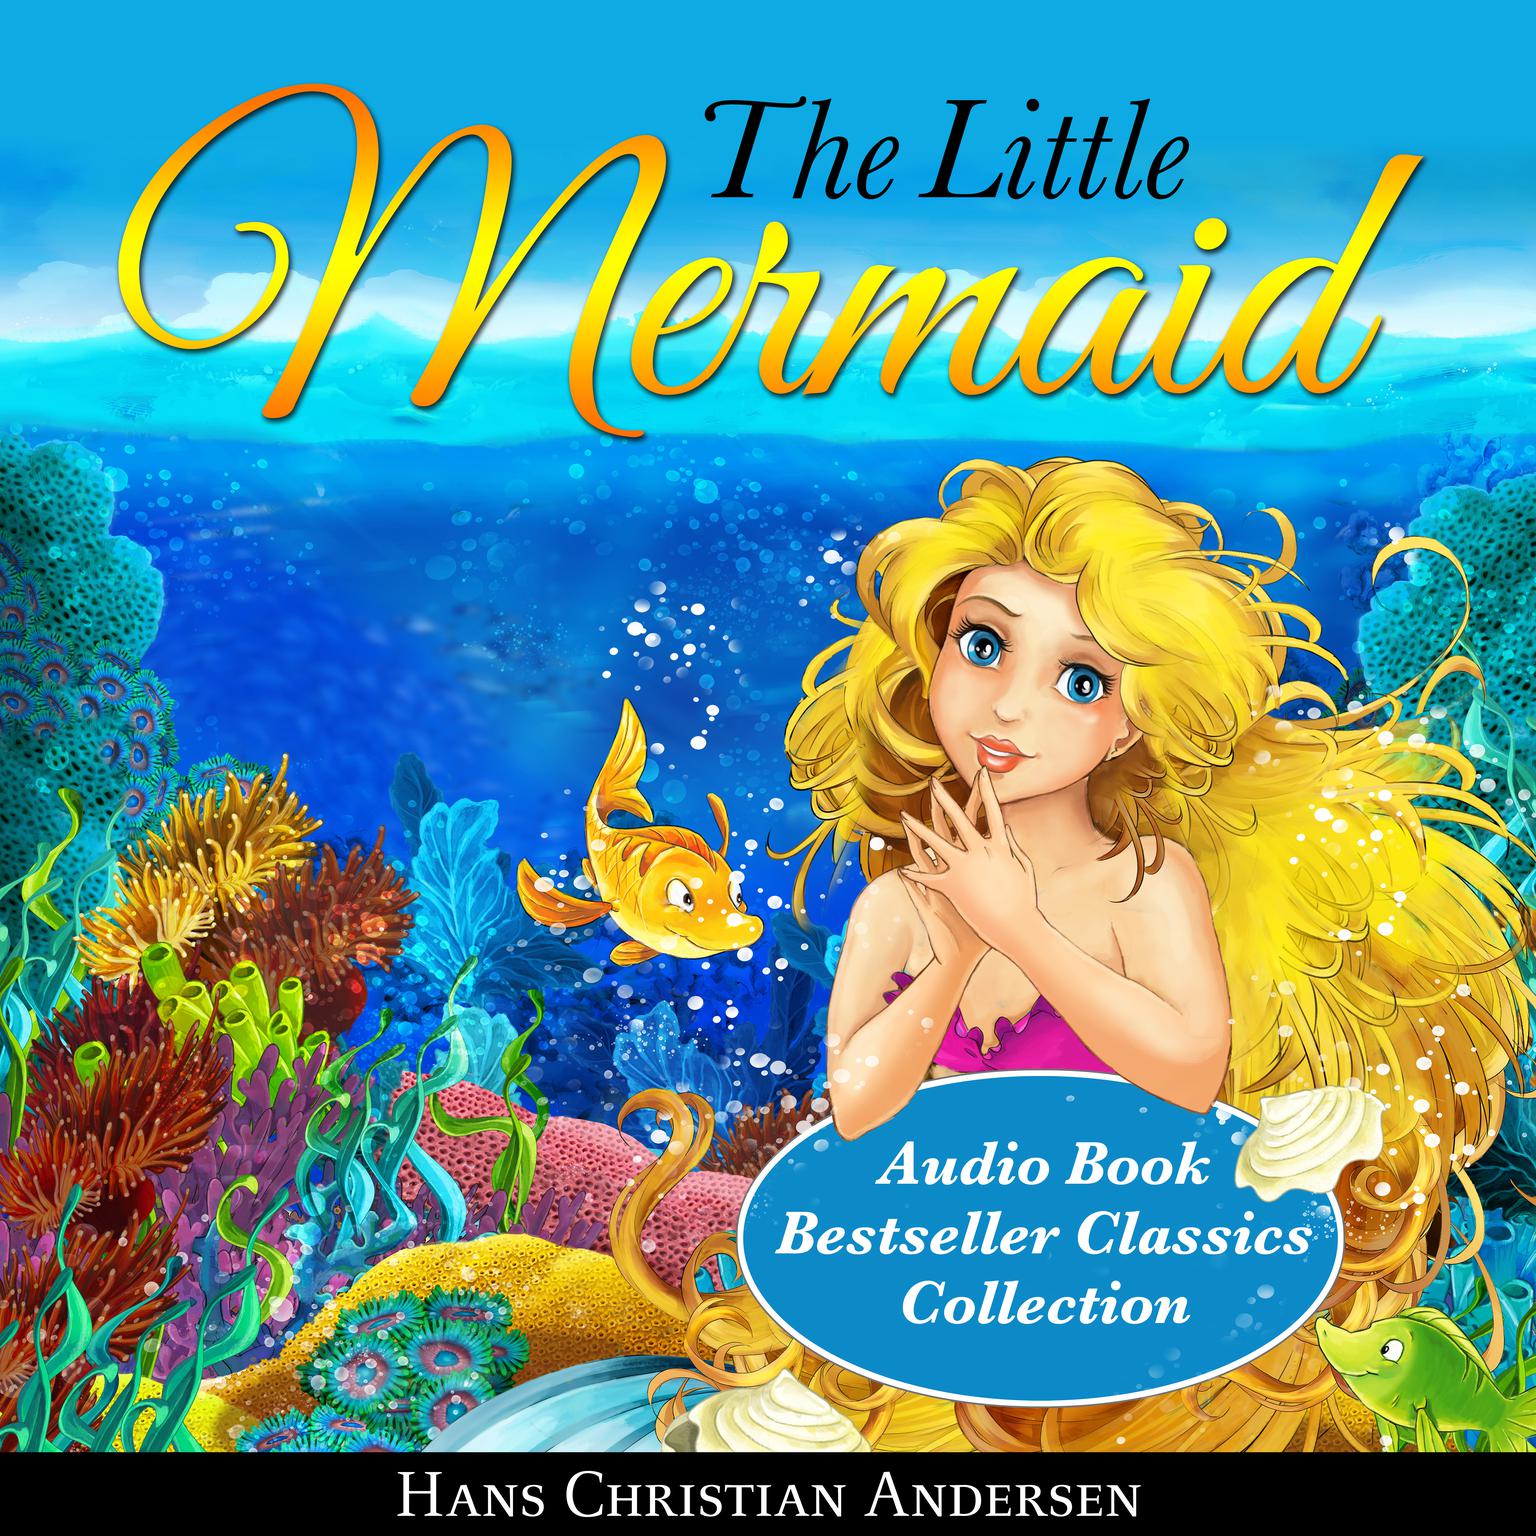 The Little Mermaid Audiobook, by Hans Christian Andersen